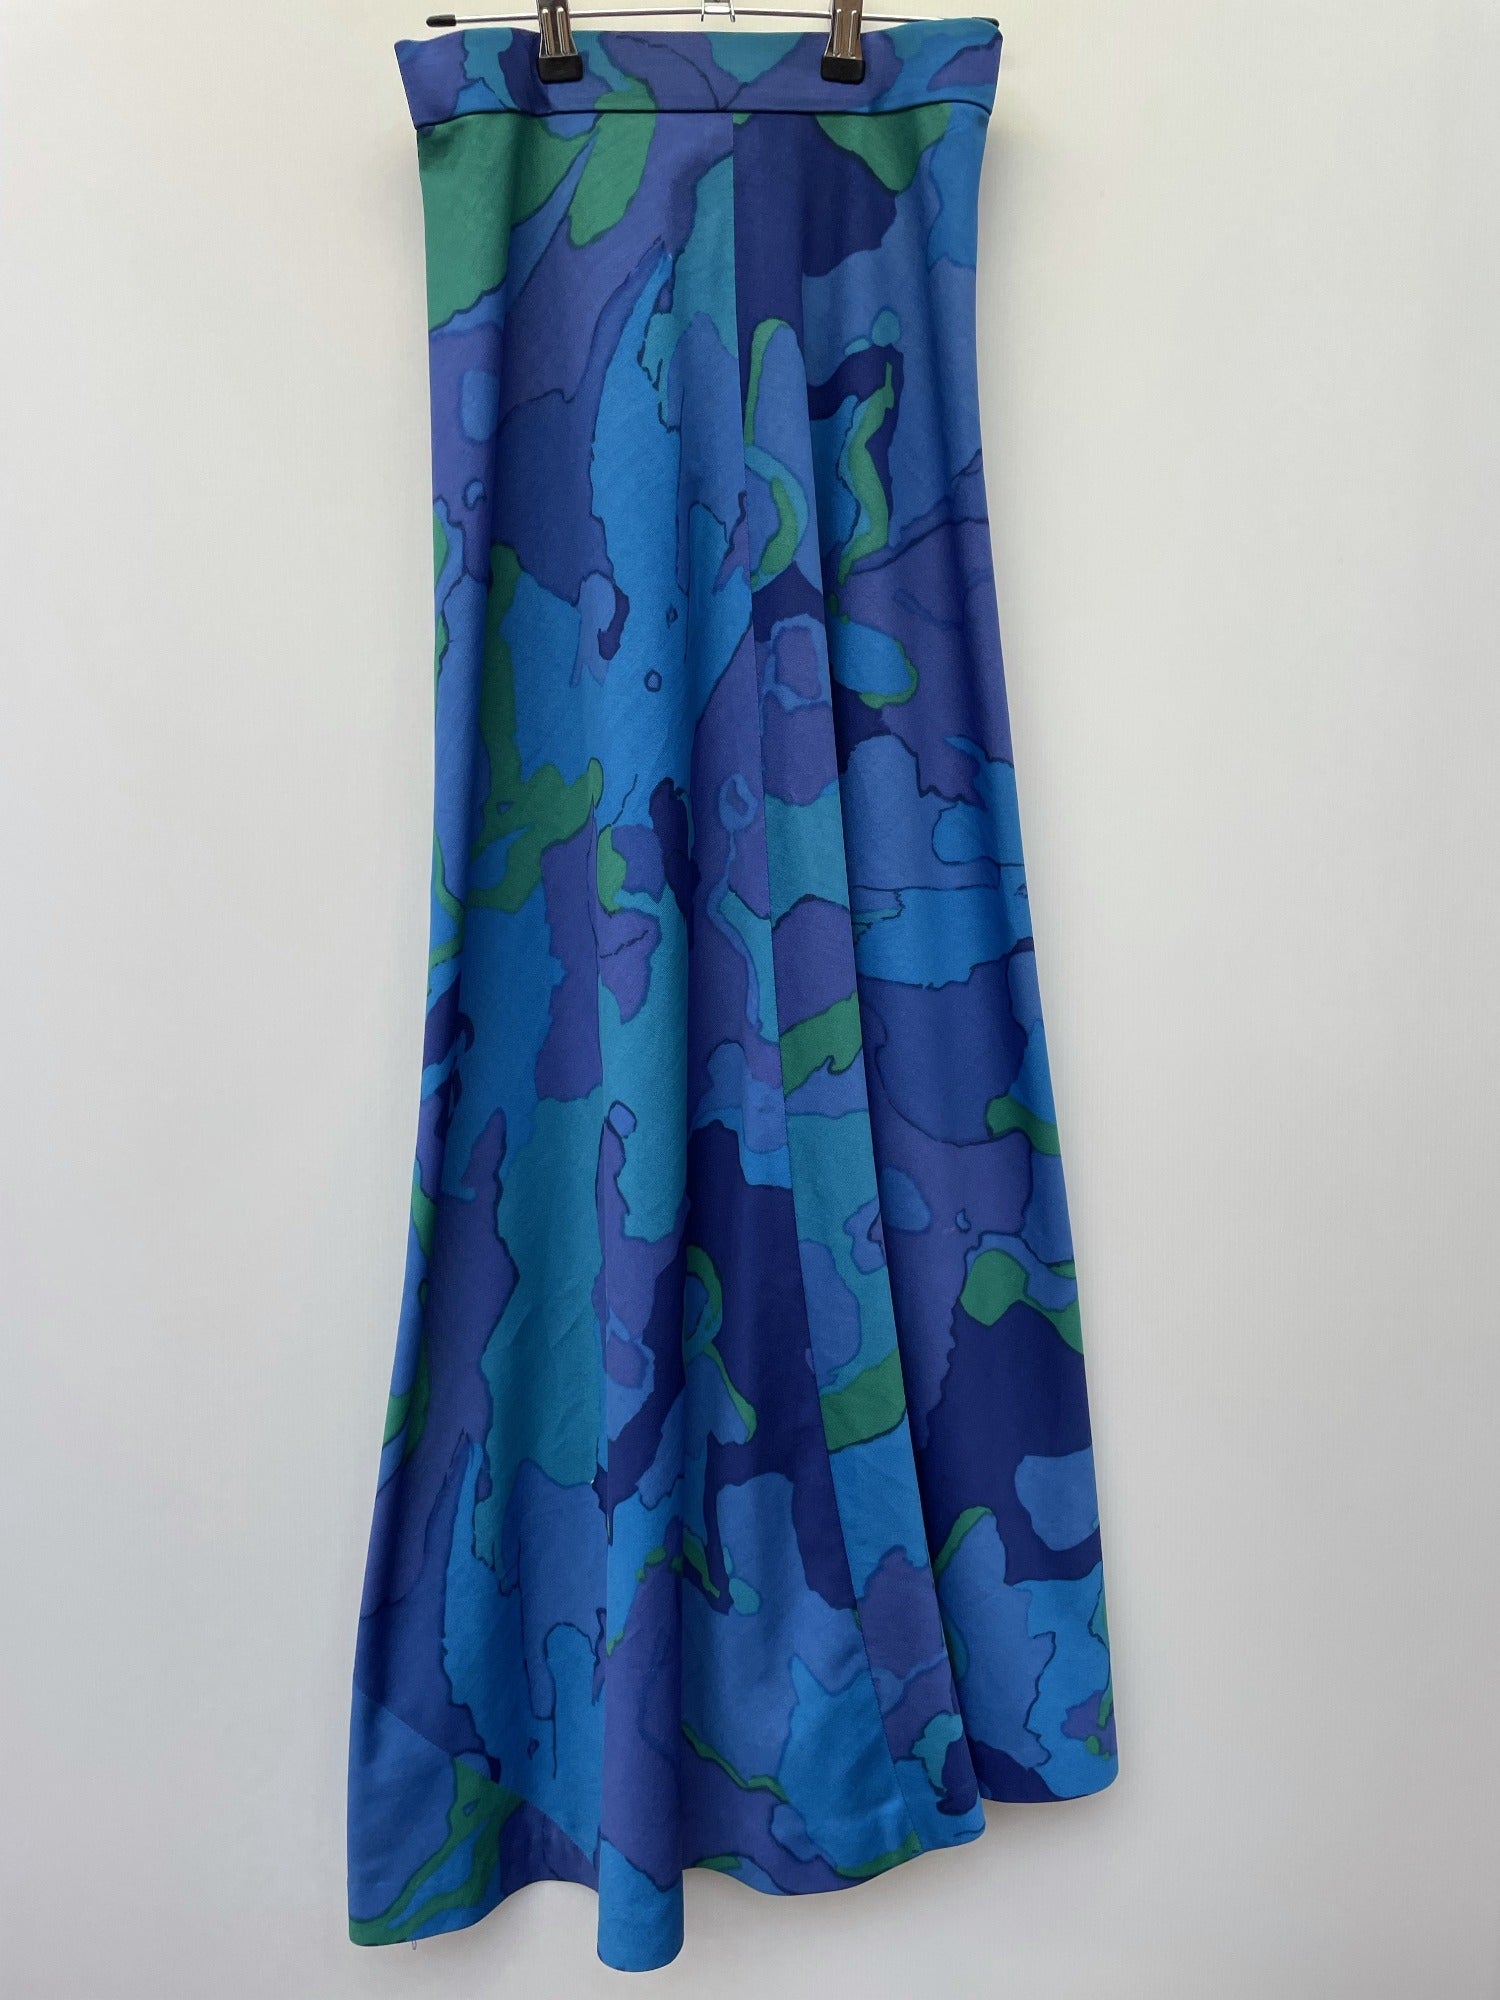 zip  womens  vintage  Urban Village Vintage  urban village  Skirts  skirt  retro  polyester  patterned  maxi  blue  A Line  8  70s  1970s